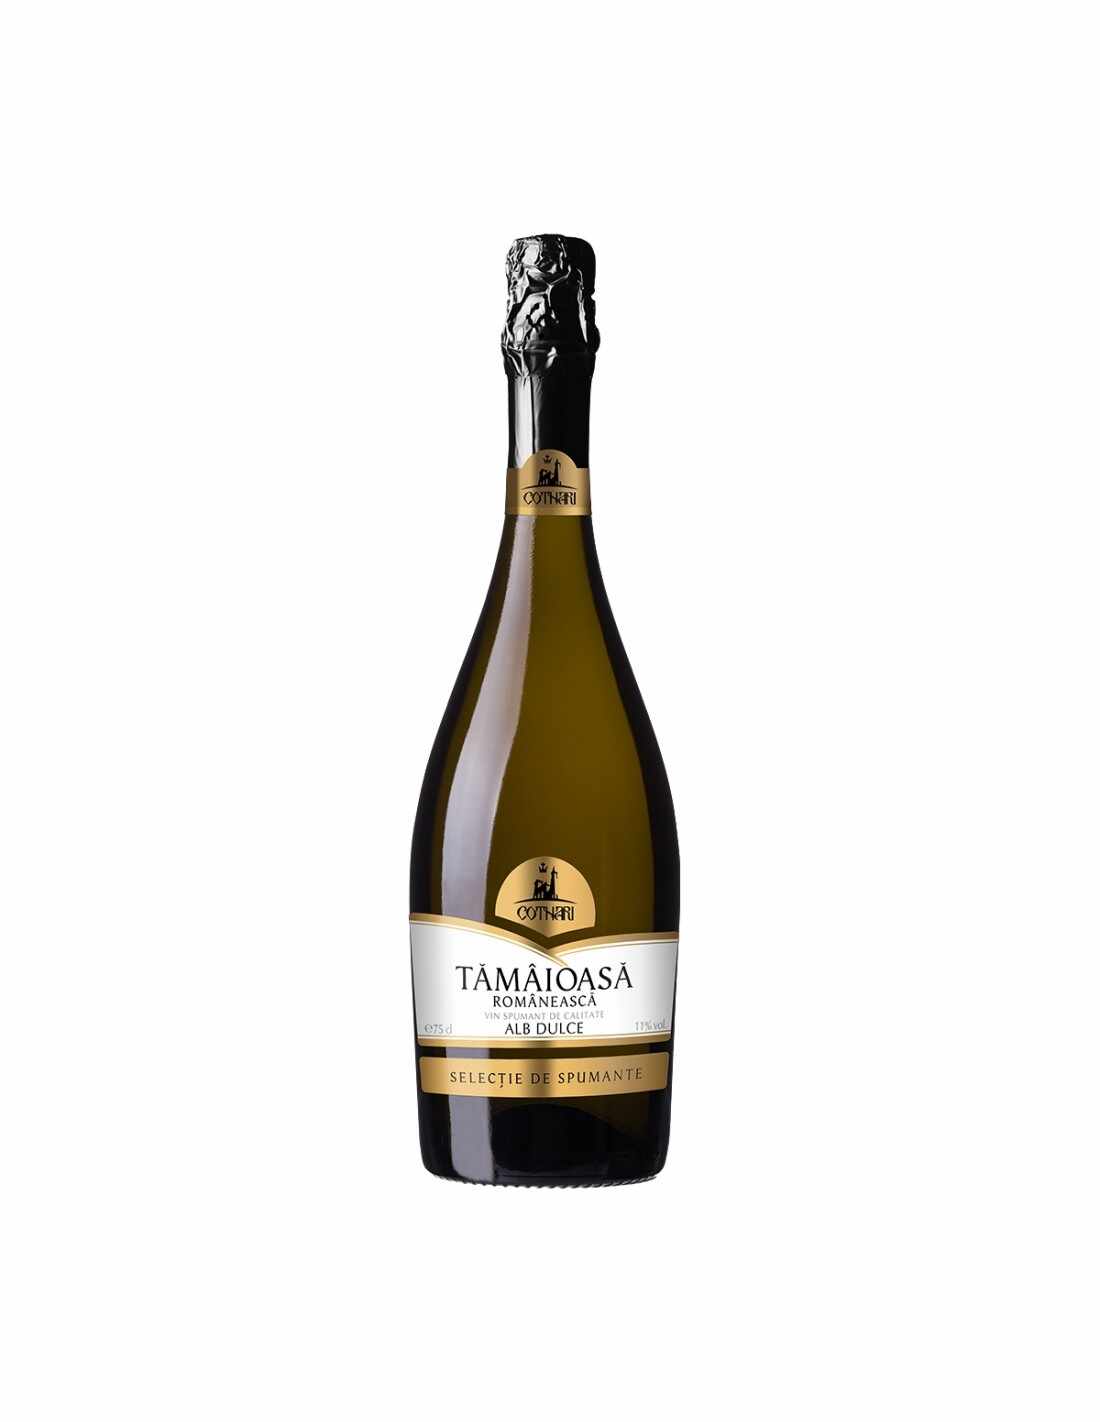 Vin spumant alb dulce, Tamaioasa Romaneasca, Cotnari, 11% alc., 0.75 L, Romania